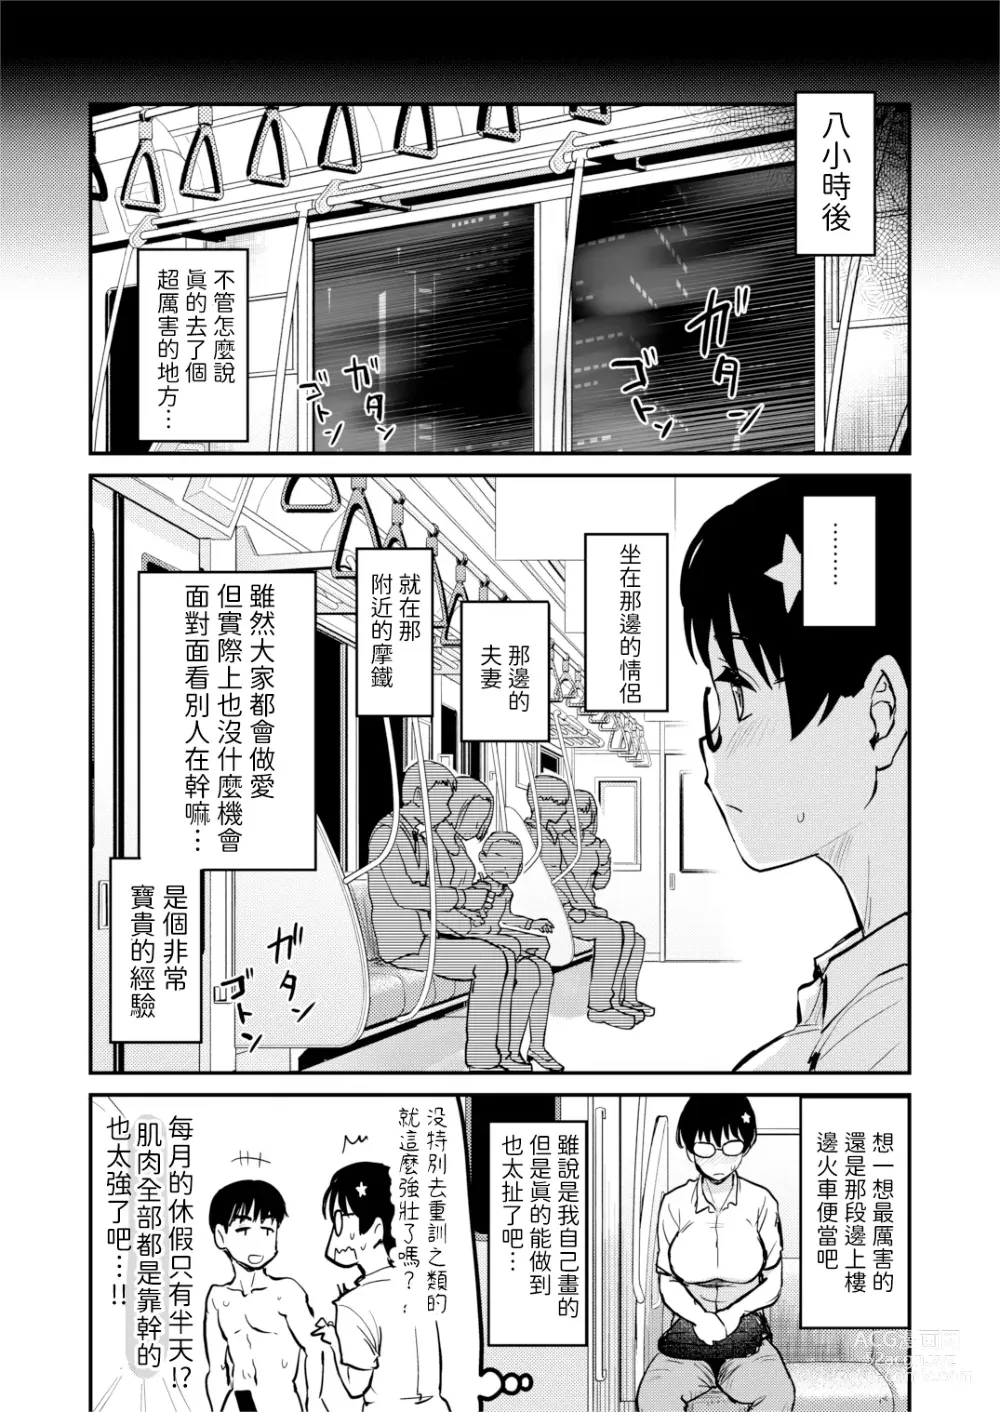 Page 24 of doujinshi 我畫的色情漫畫被AV真人化了!? 因為機會難得所以去拍攝現場觀摩之後的心得感想